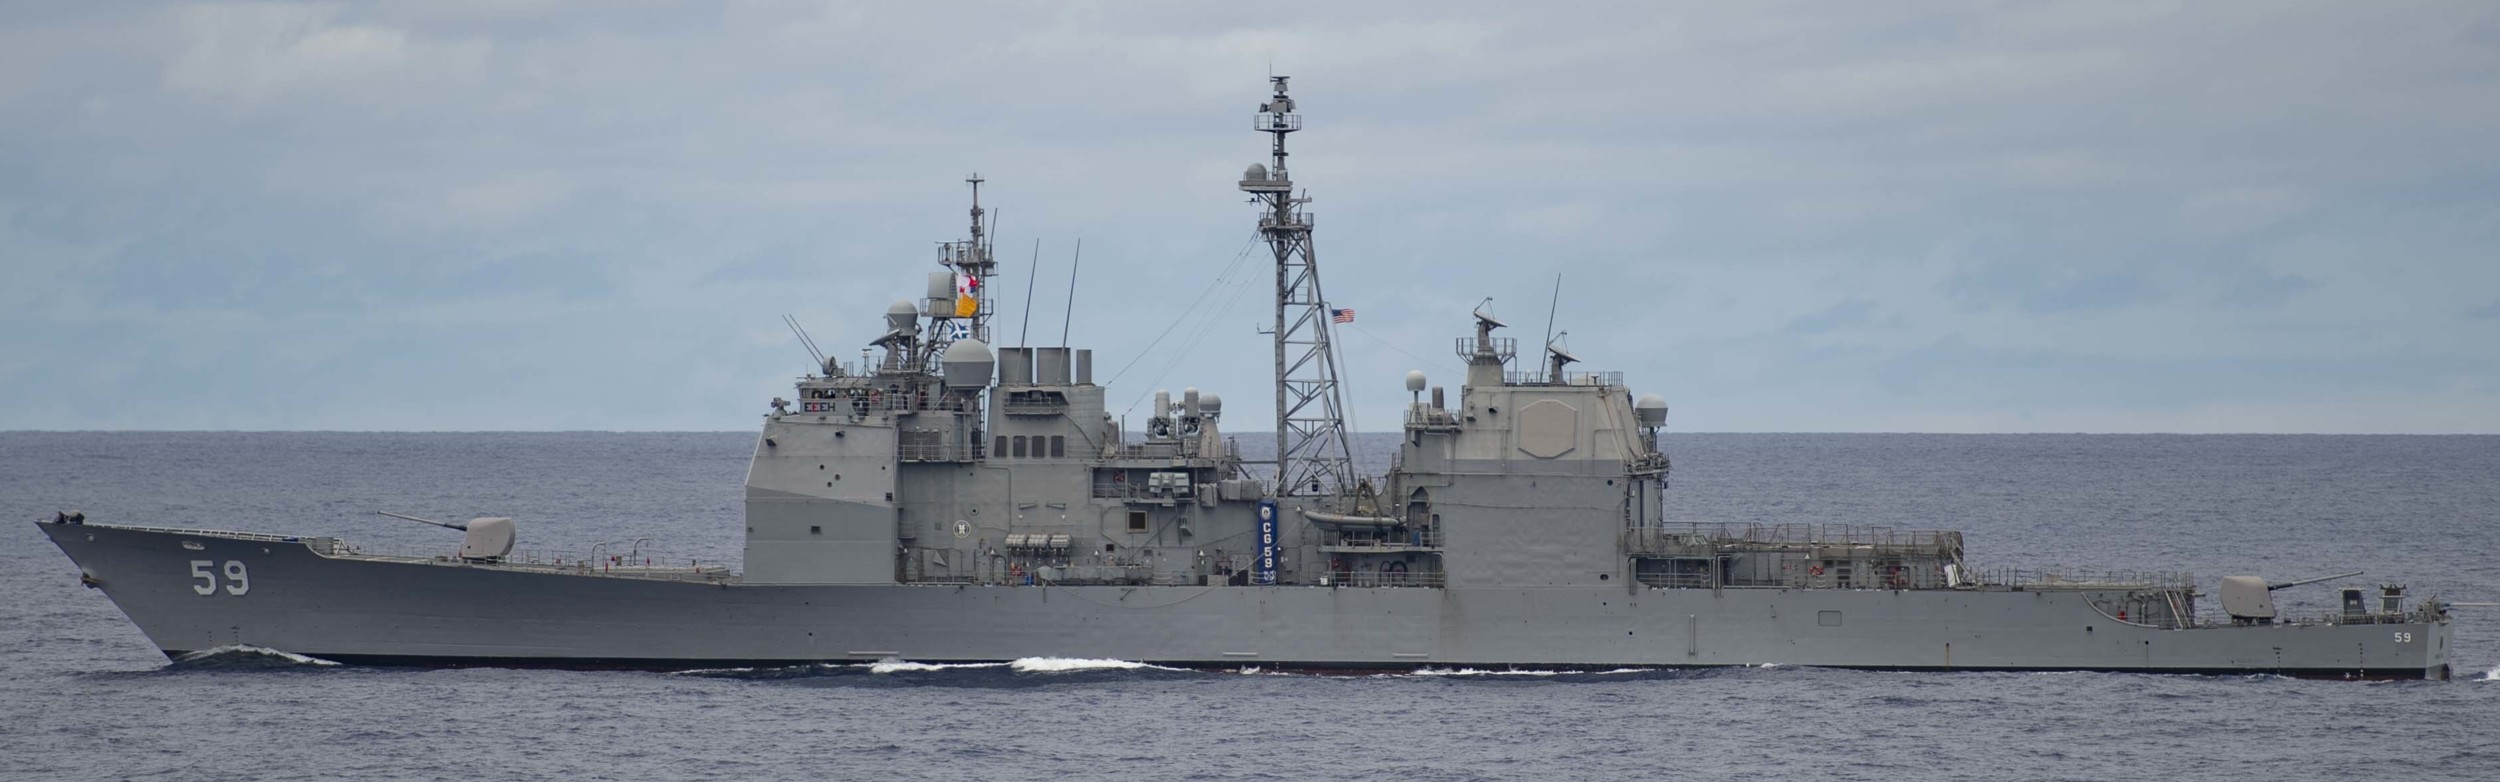 cg-59 uss princeton ticonderoga class guided missile cruiser aegis us navy 86